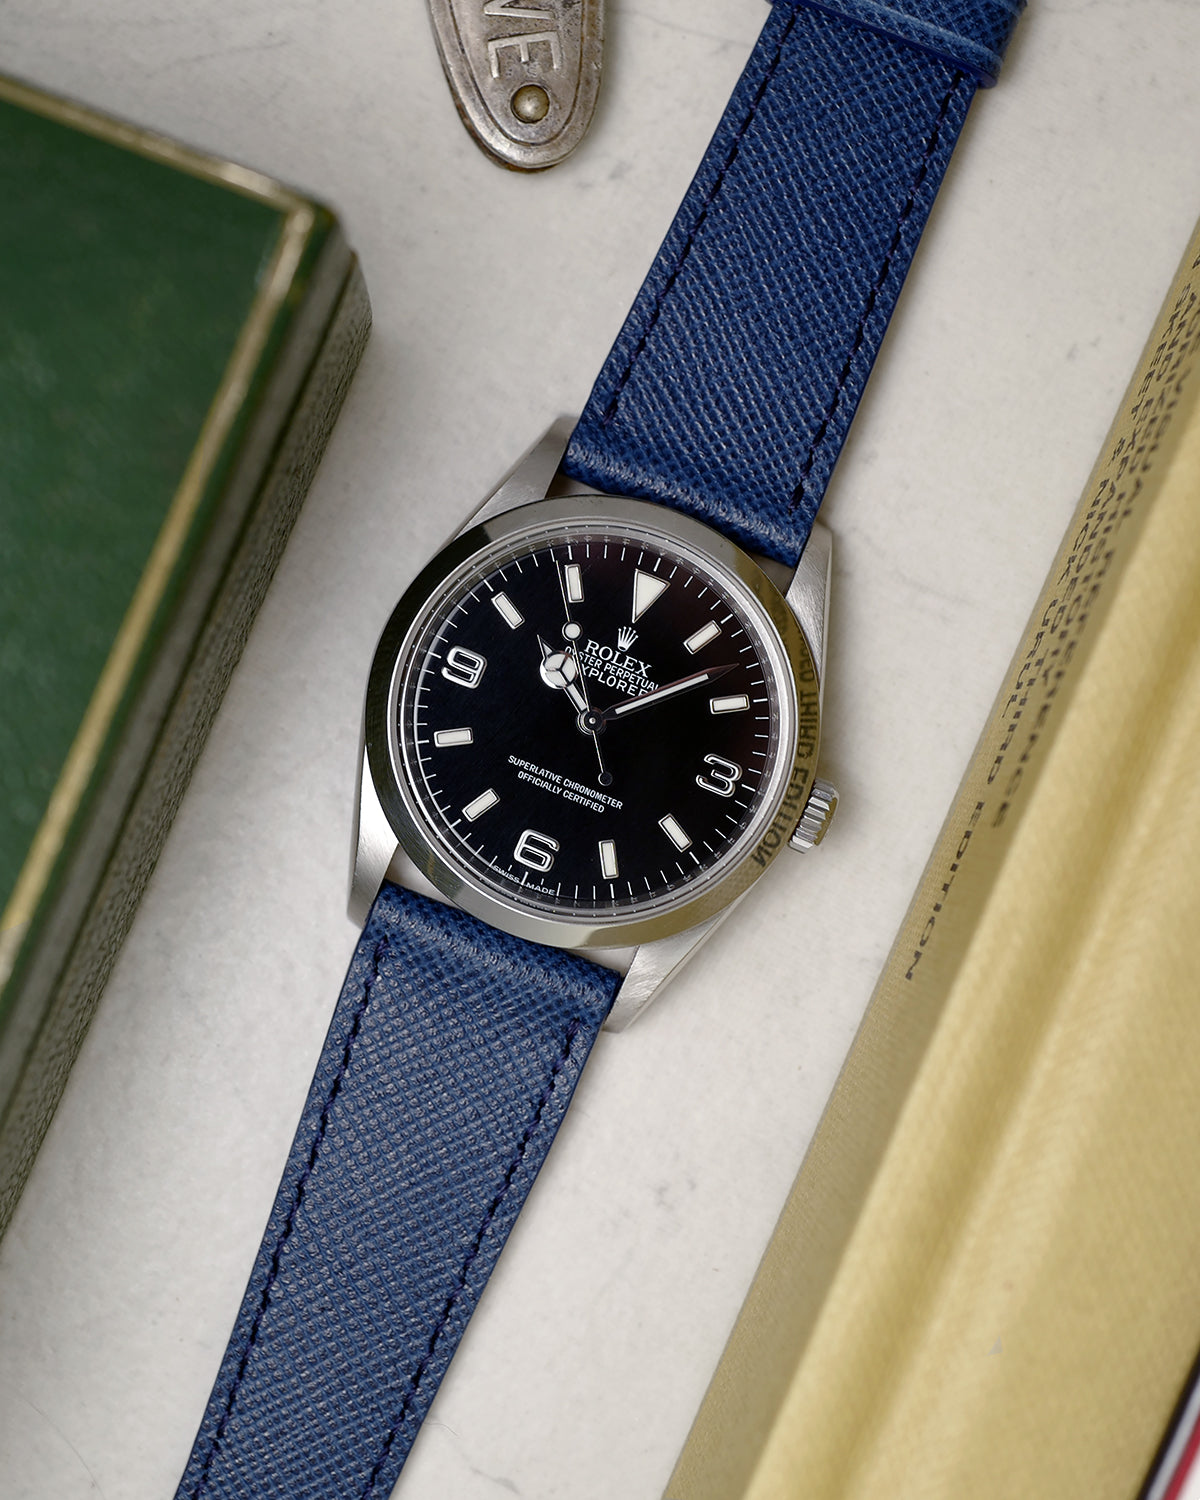 Beige Saffiano Handmade Leather Watch Strap, kyRoS Straps